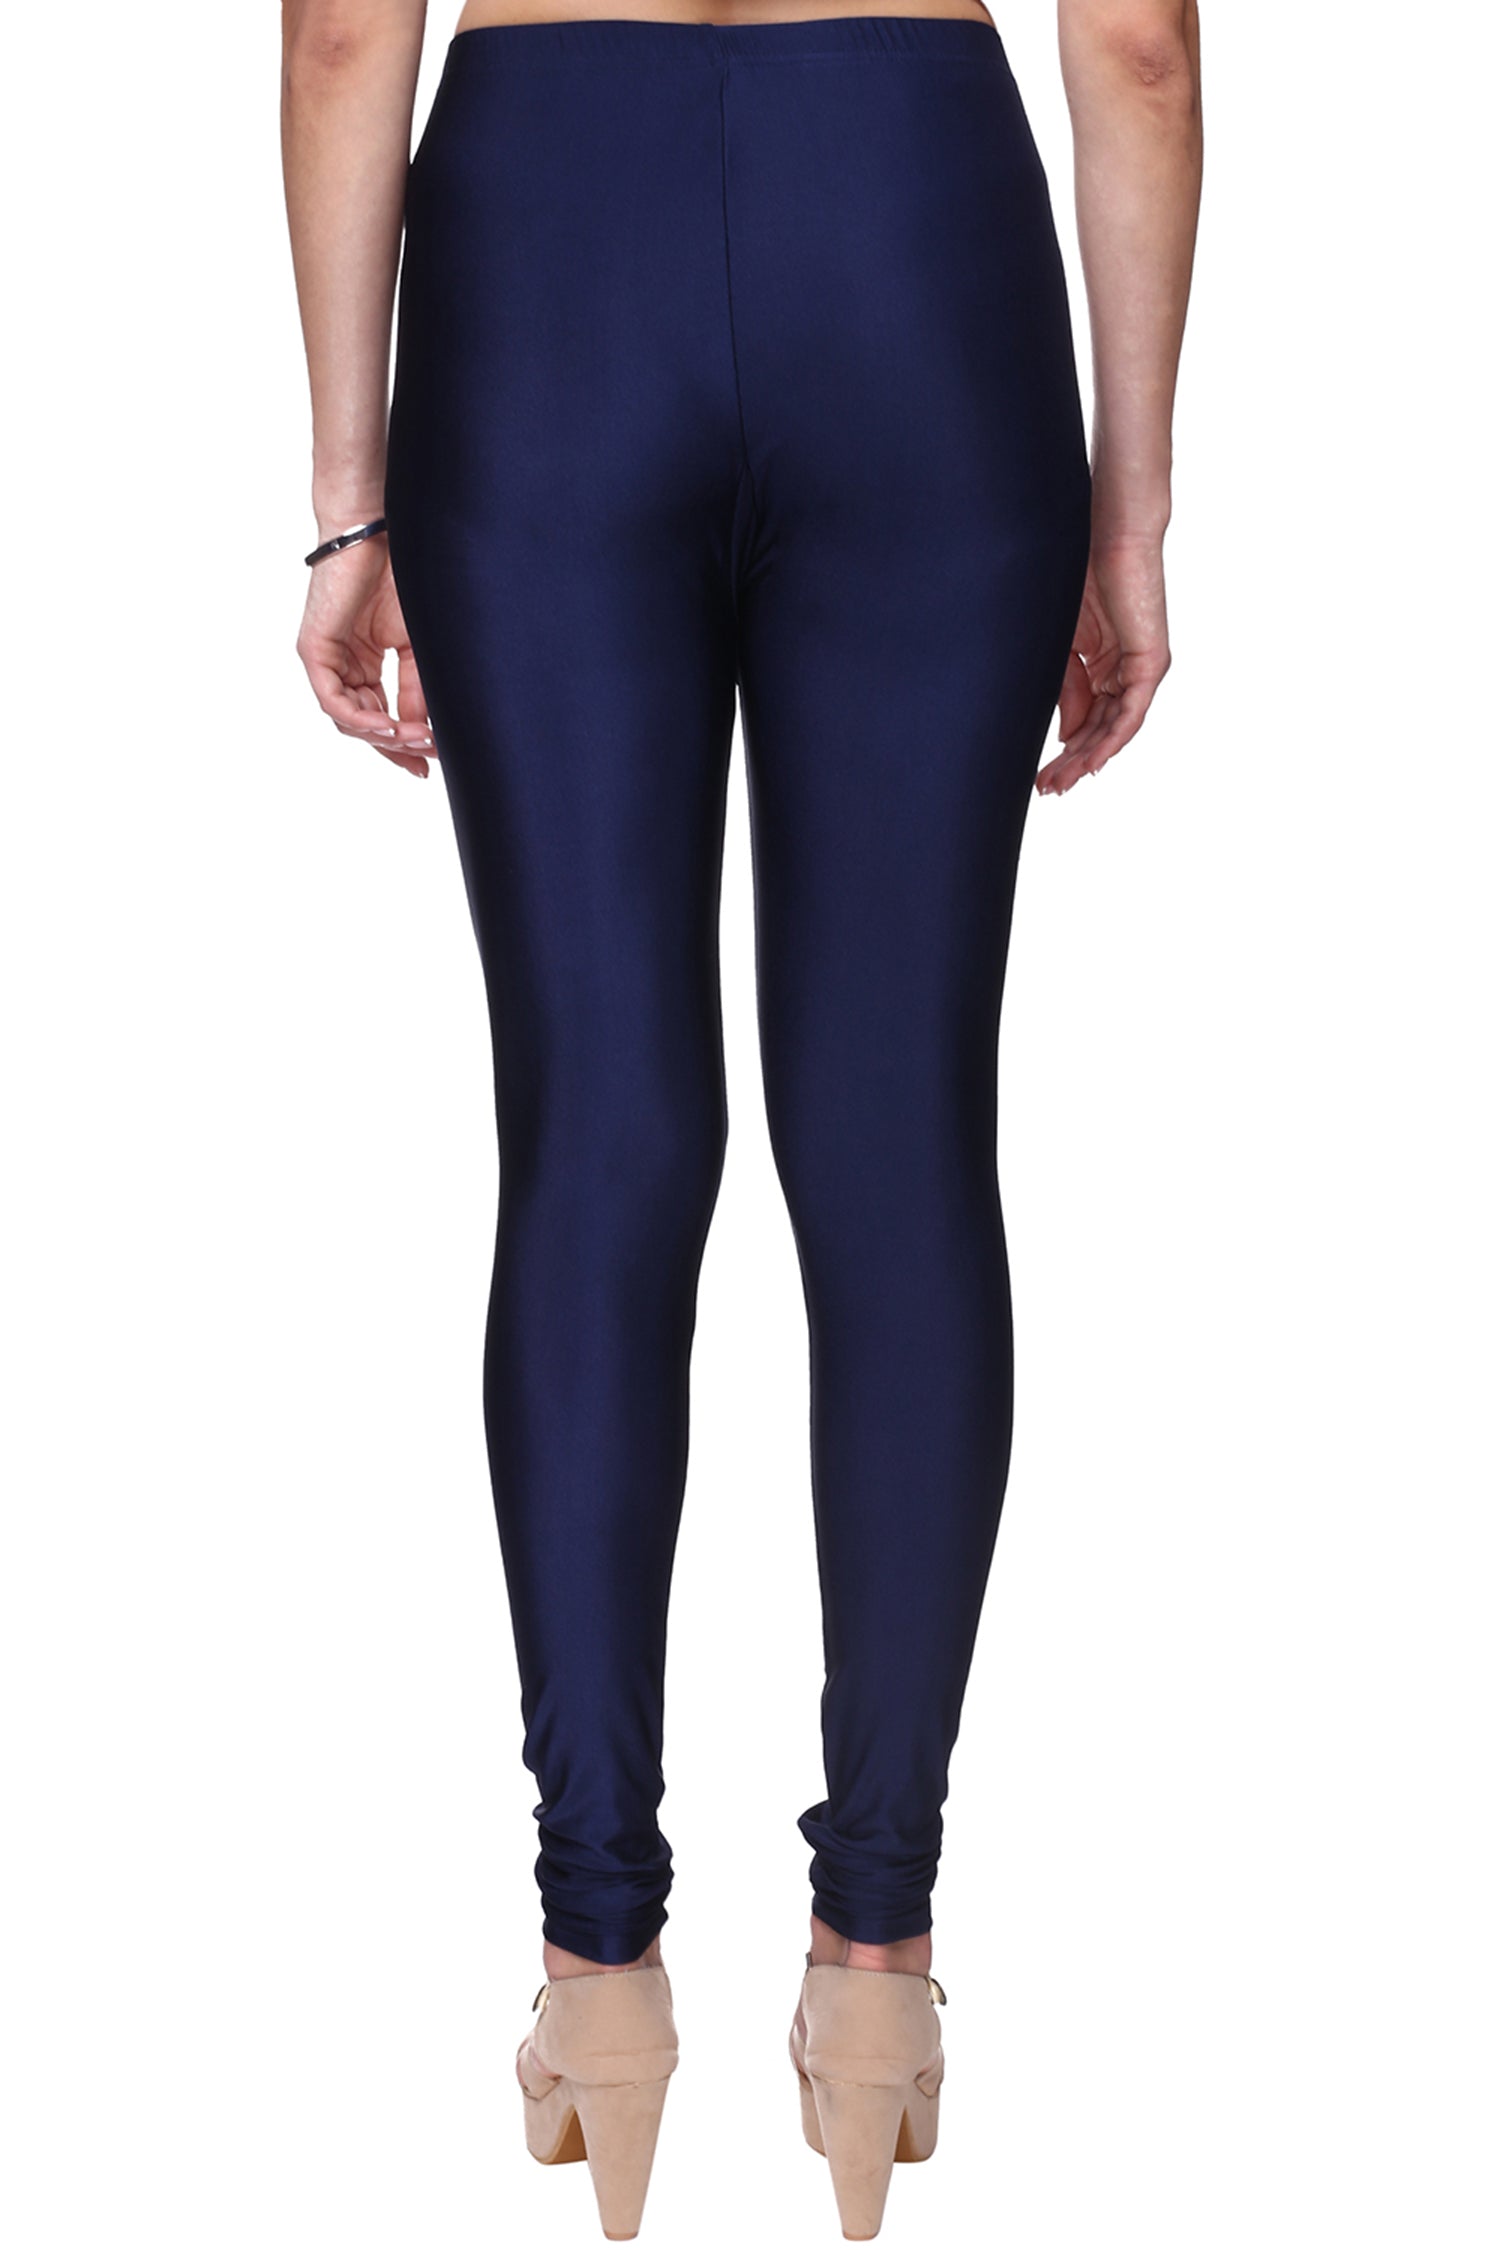 Buy TRASA Women's Cotton Slim Fit Churidar Leggings - Navy Blue